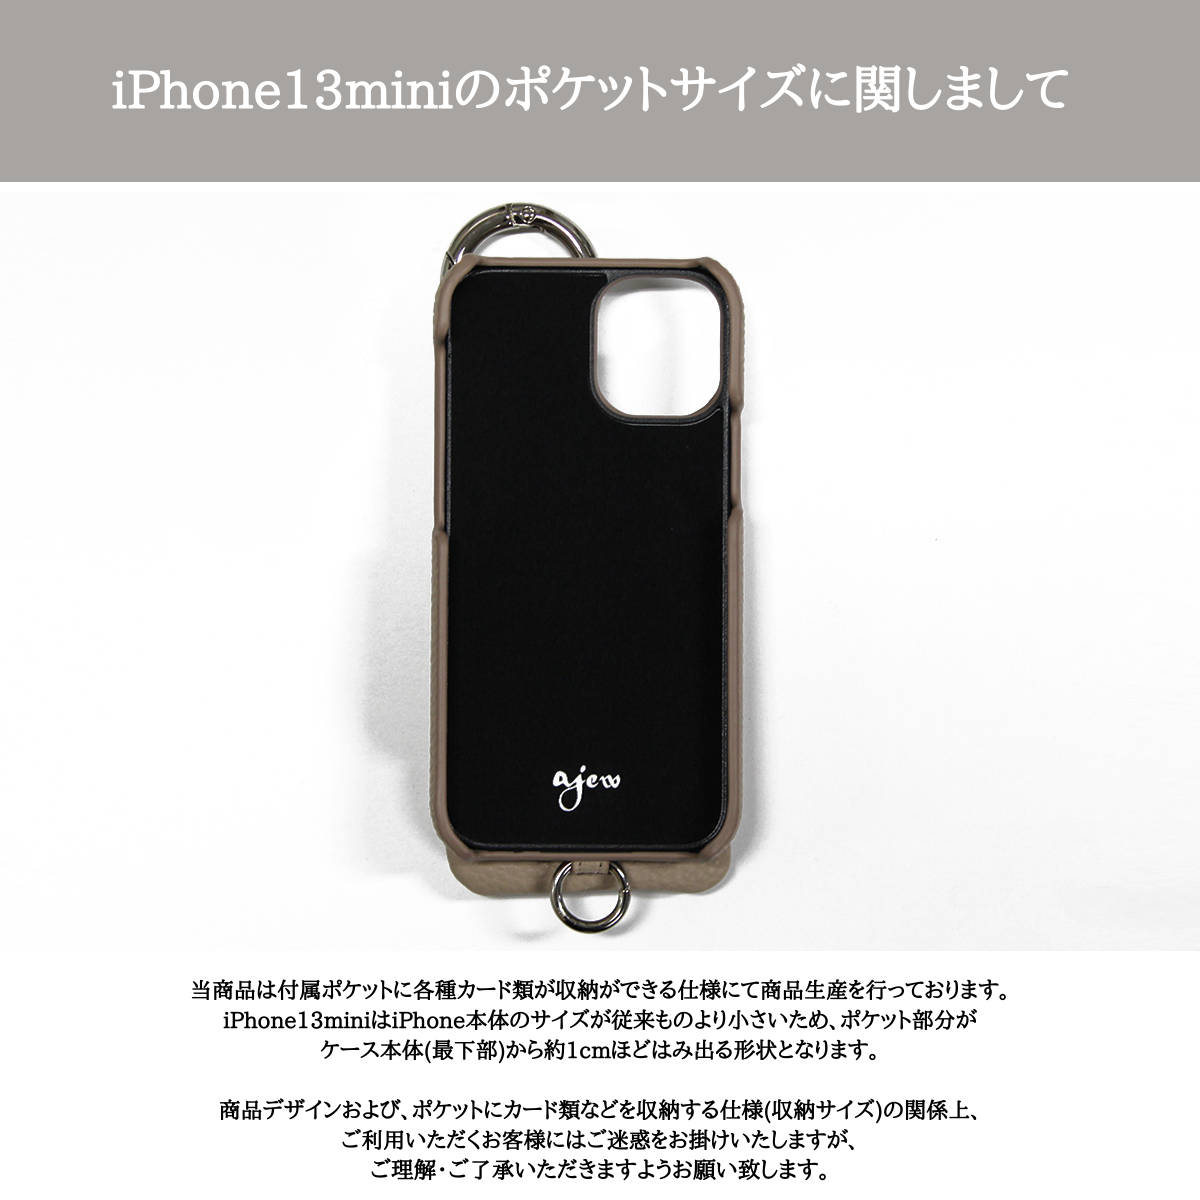 iPhone13mini / green 【バイカラー】 (発送はご注文から3営業日以内です) - ajew